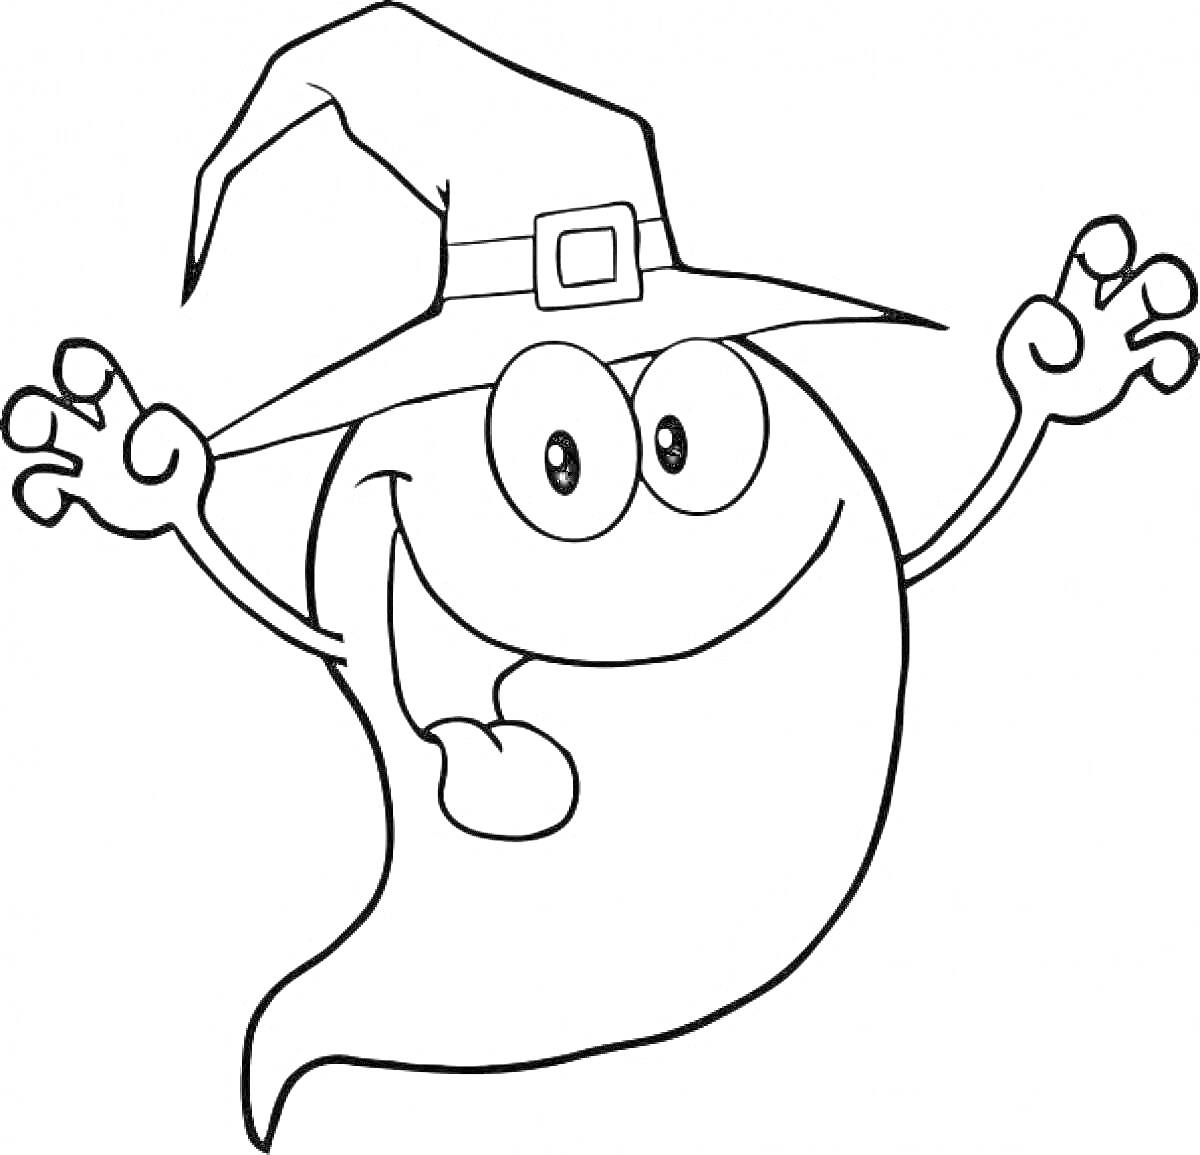 На раскраске изображено: Шляпа, Пряжка, Язык, Руки, Улыбка, Хэллоуин, Привидения